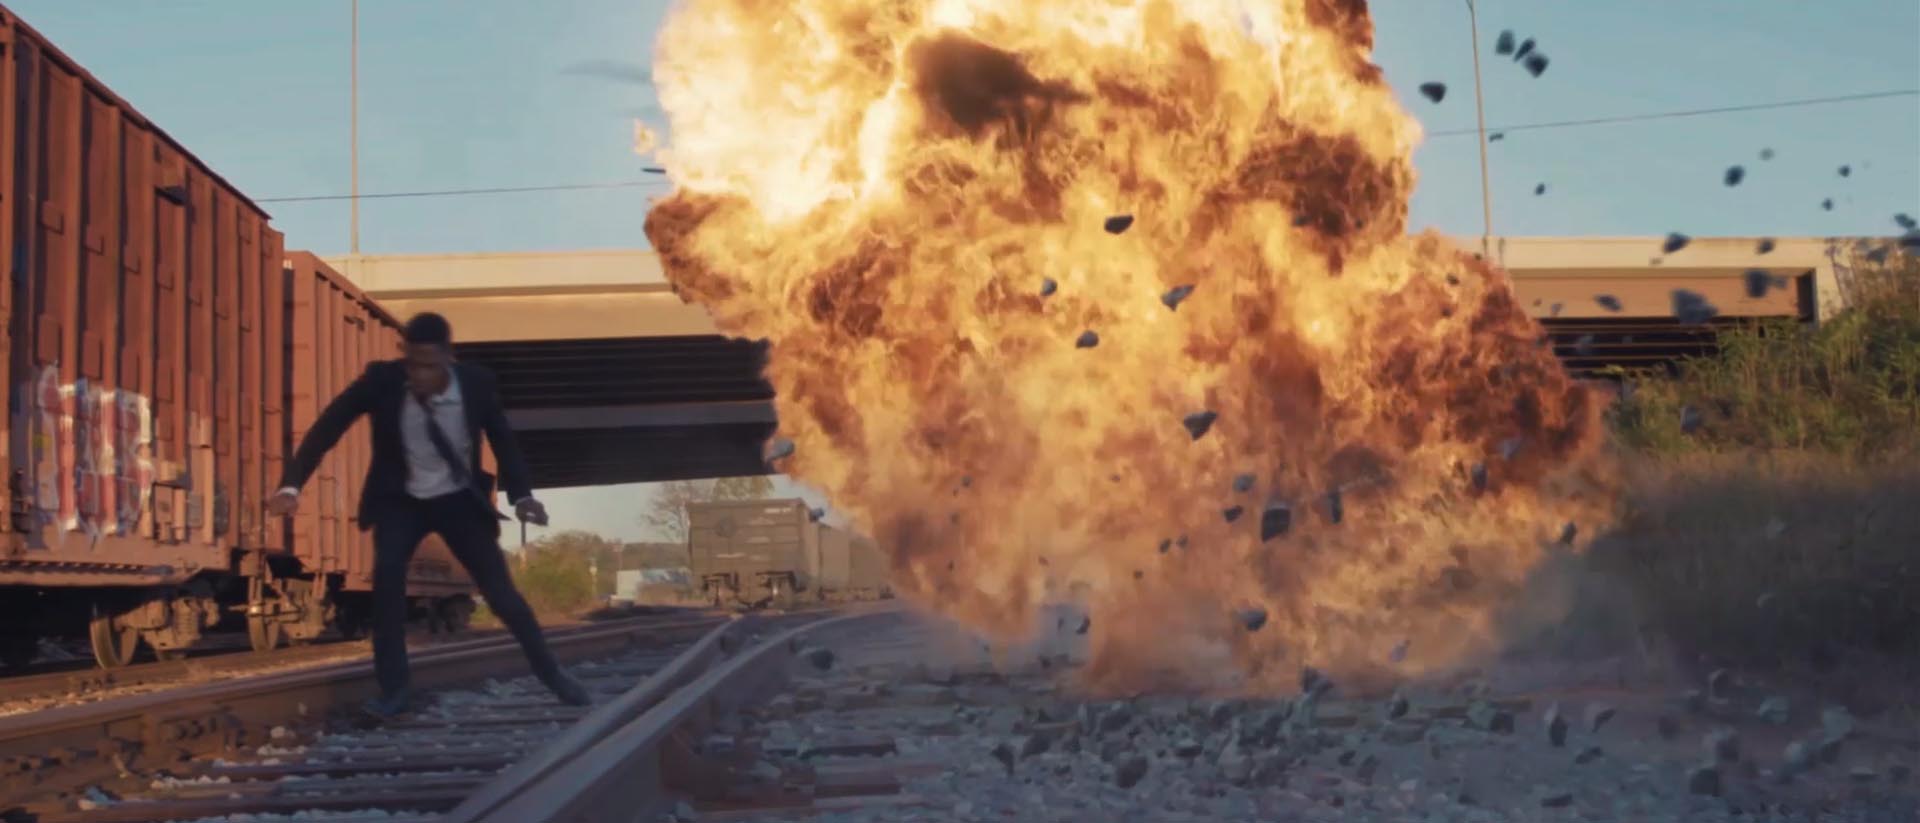 5 Steps to Composite Explosion & Debris VFX | After Effects Tutorial